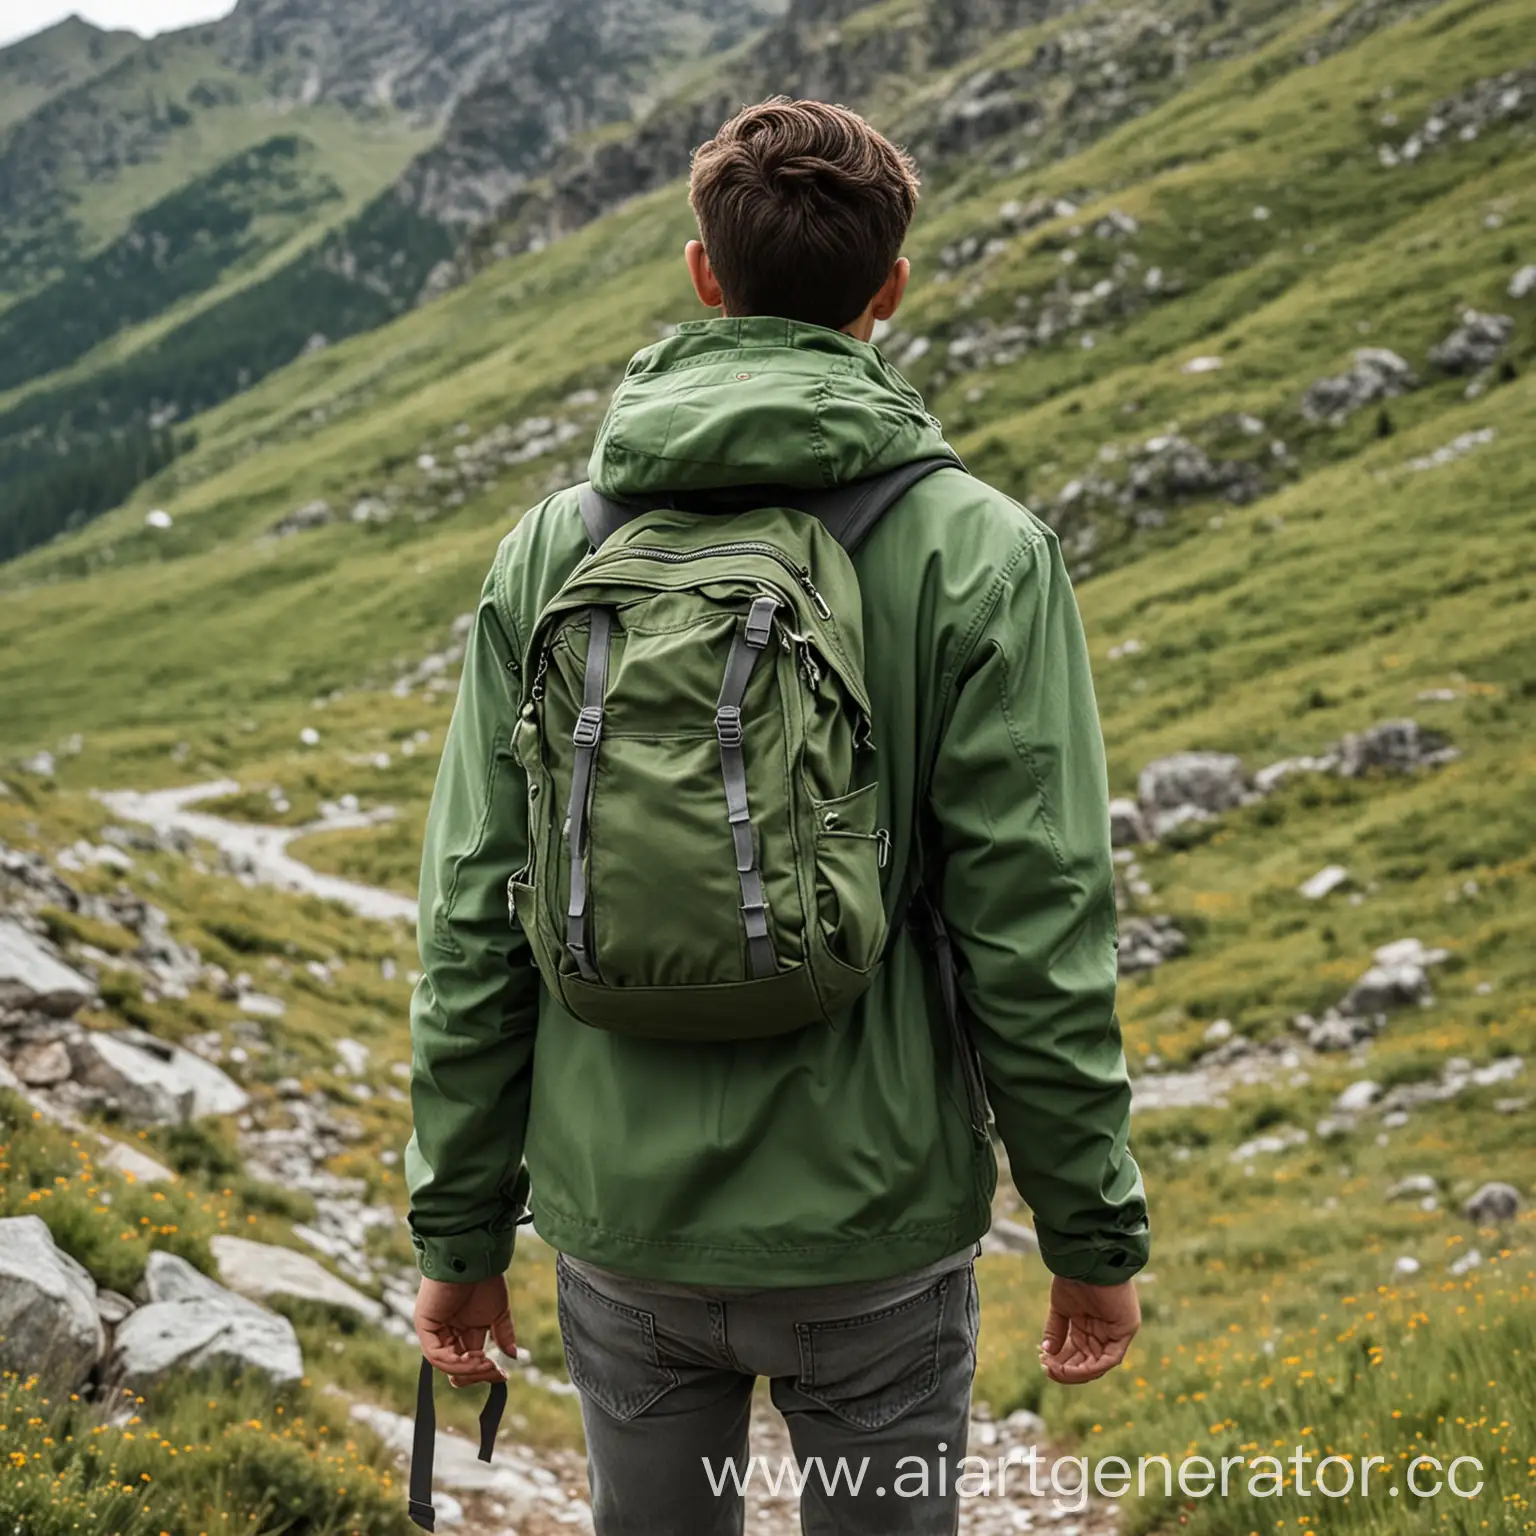 Adventurous-Young-Man-Hiking-through-Serene-Mountain-Landscape